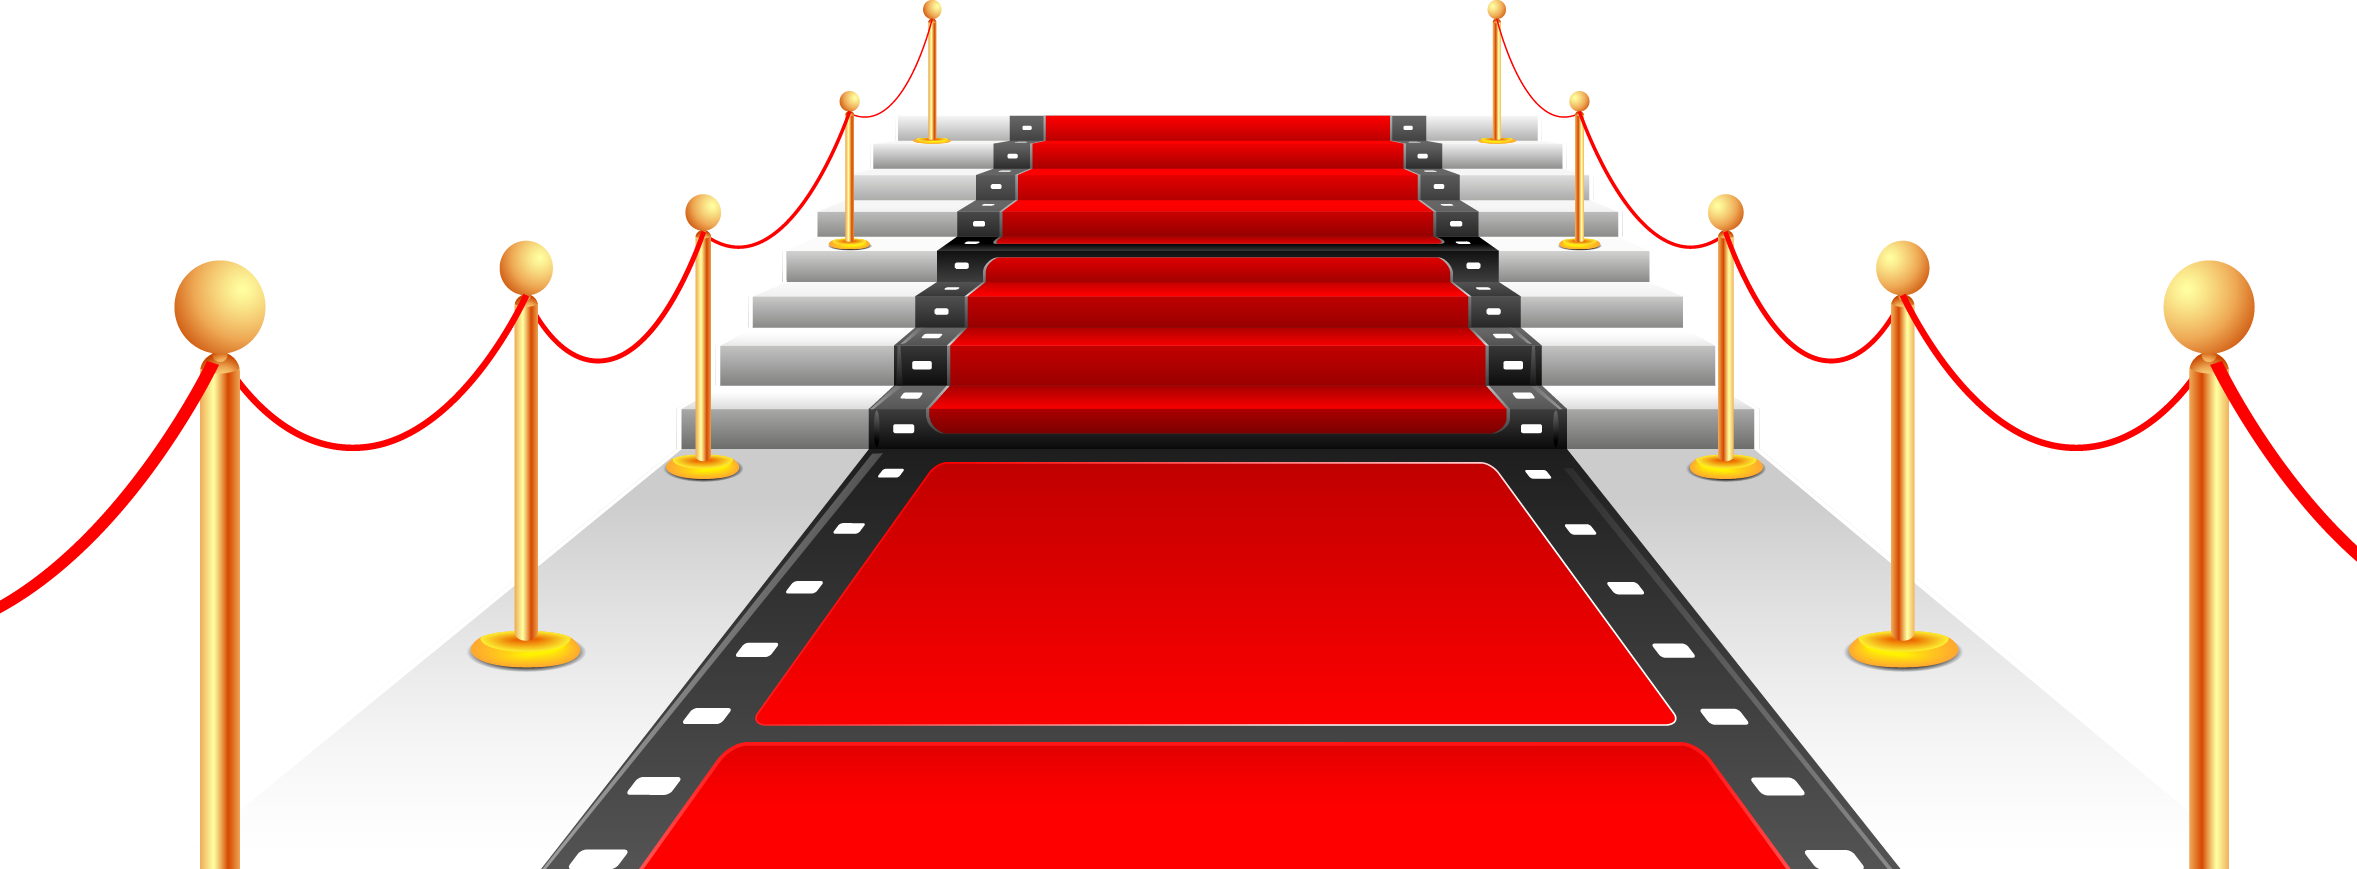 Red carpet PNG